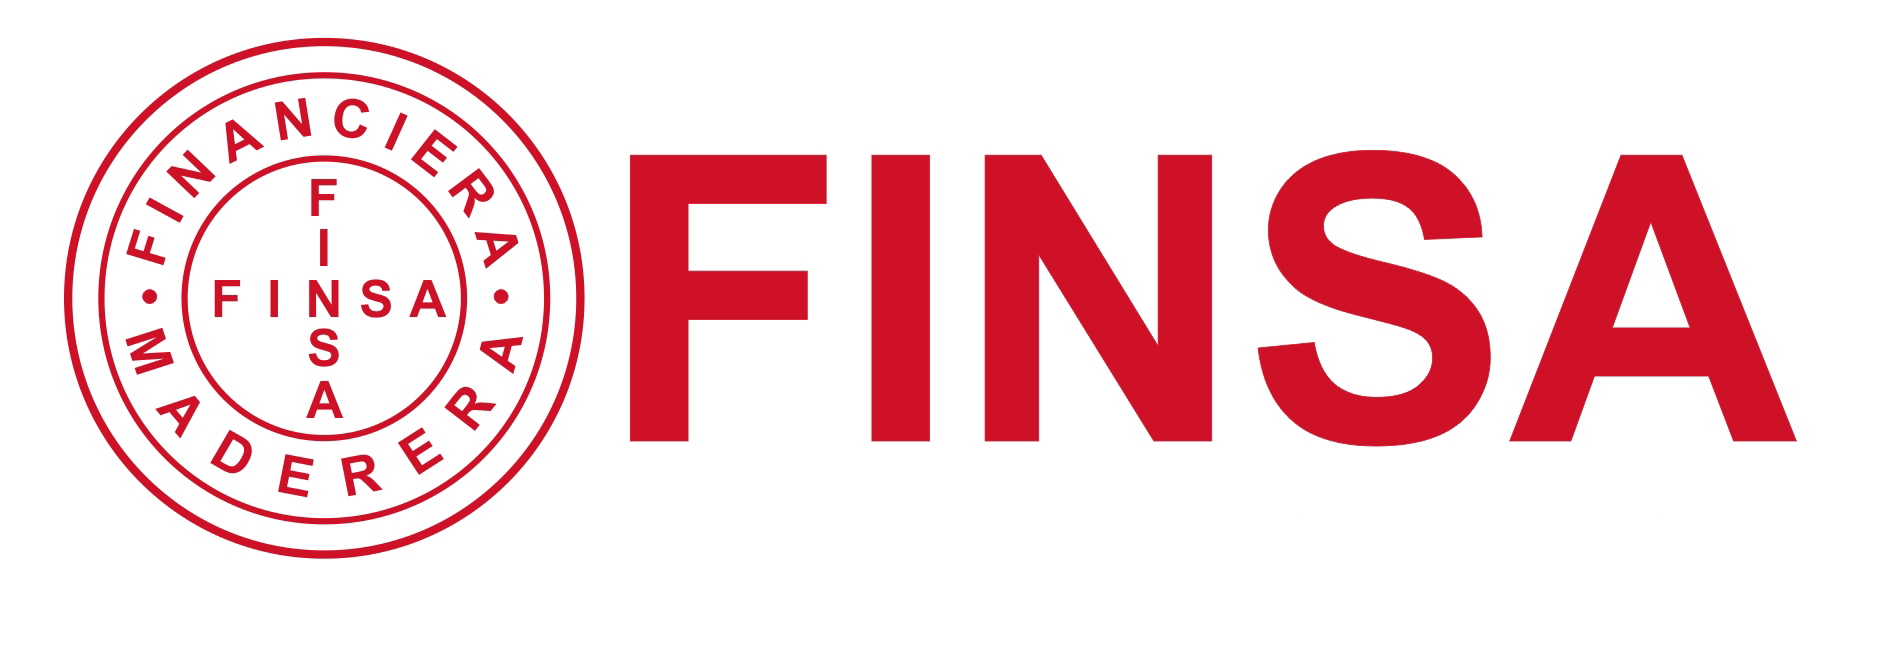 Logo de la marca Finsa.